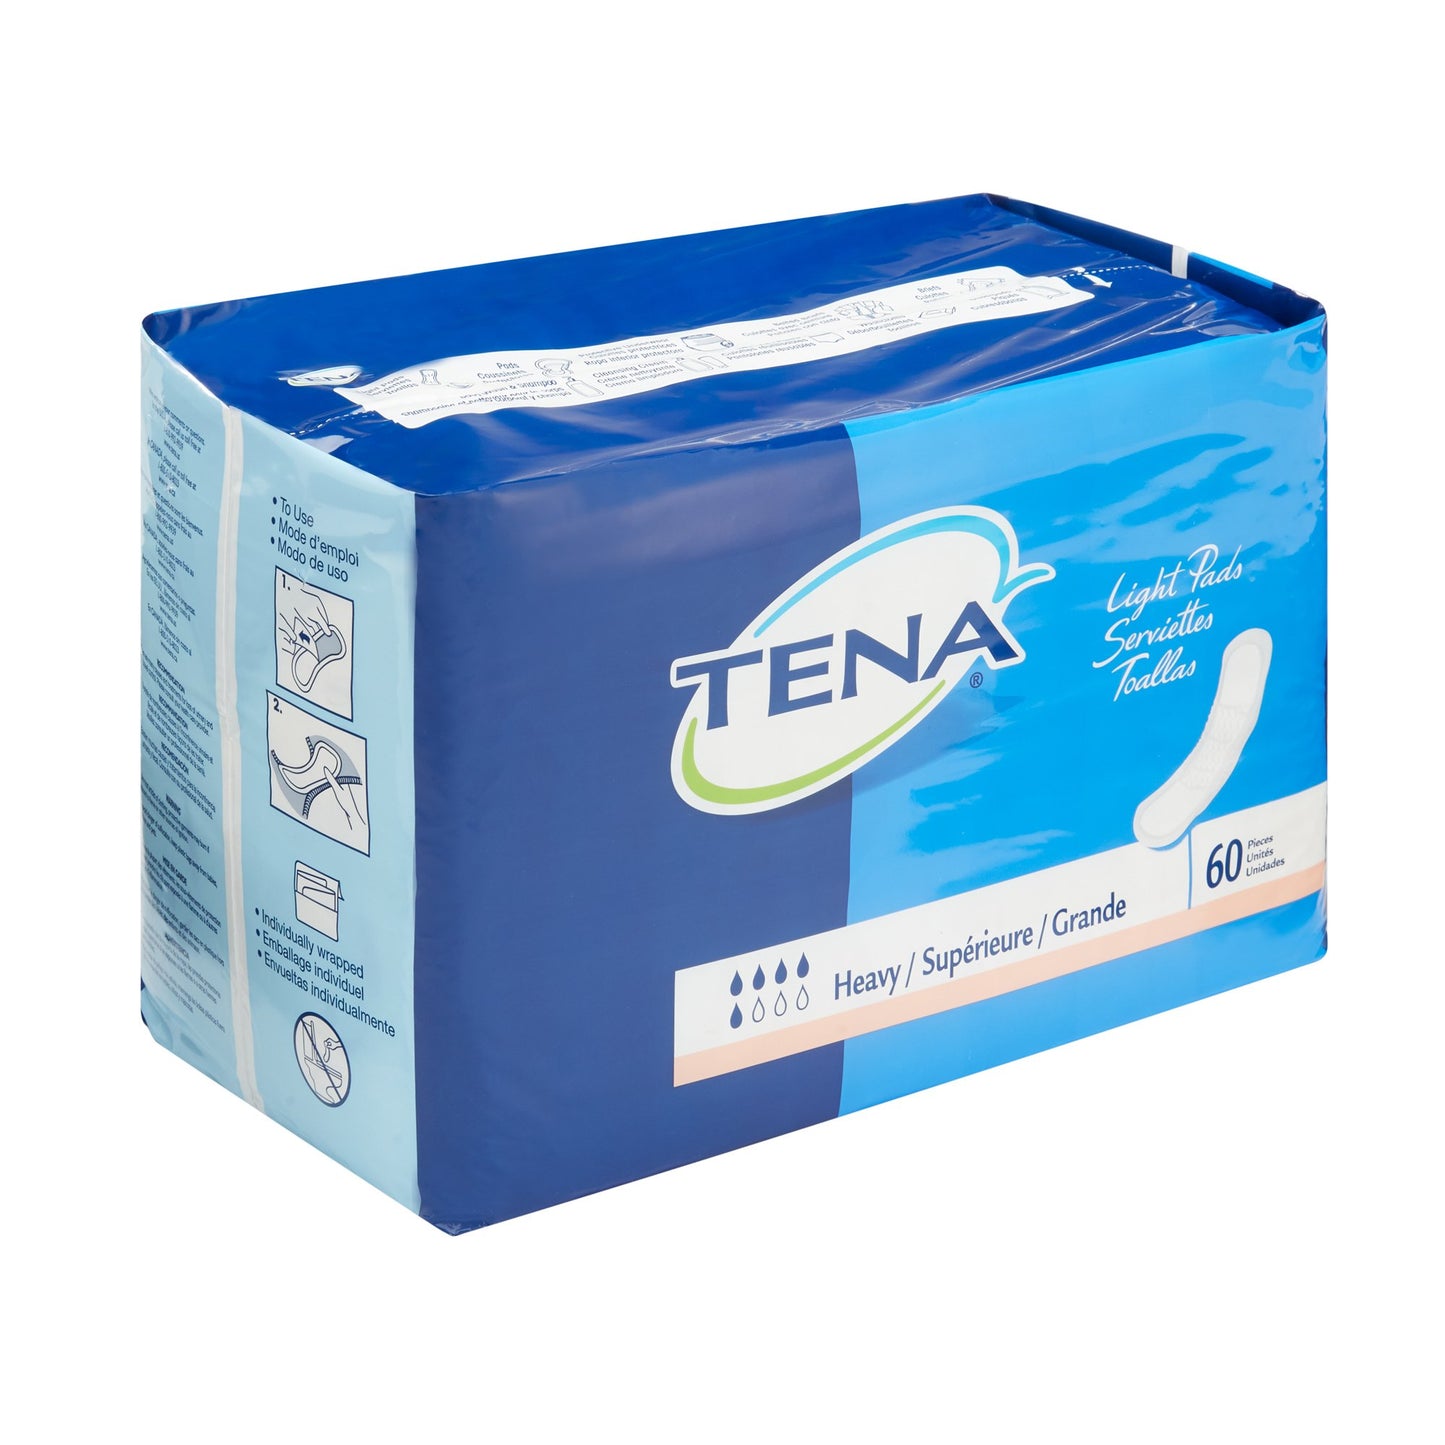 TENA Bladder Control Pads, Heavy Absorbency, 60 ct